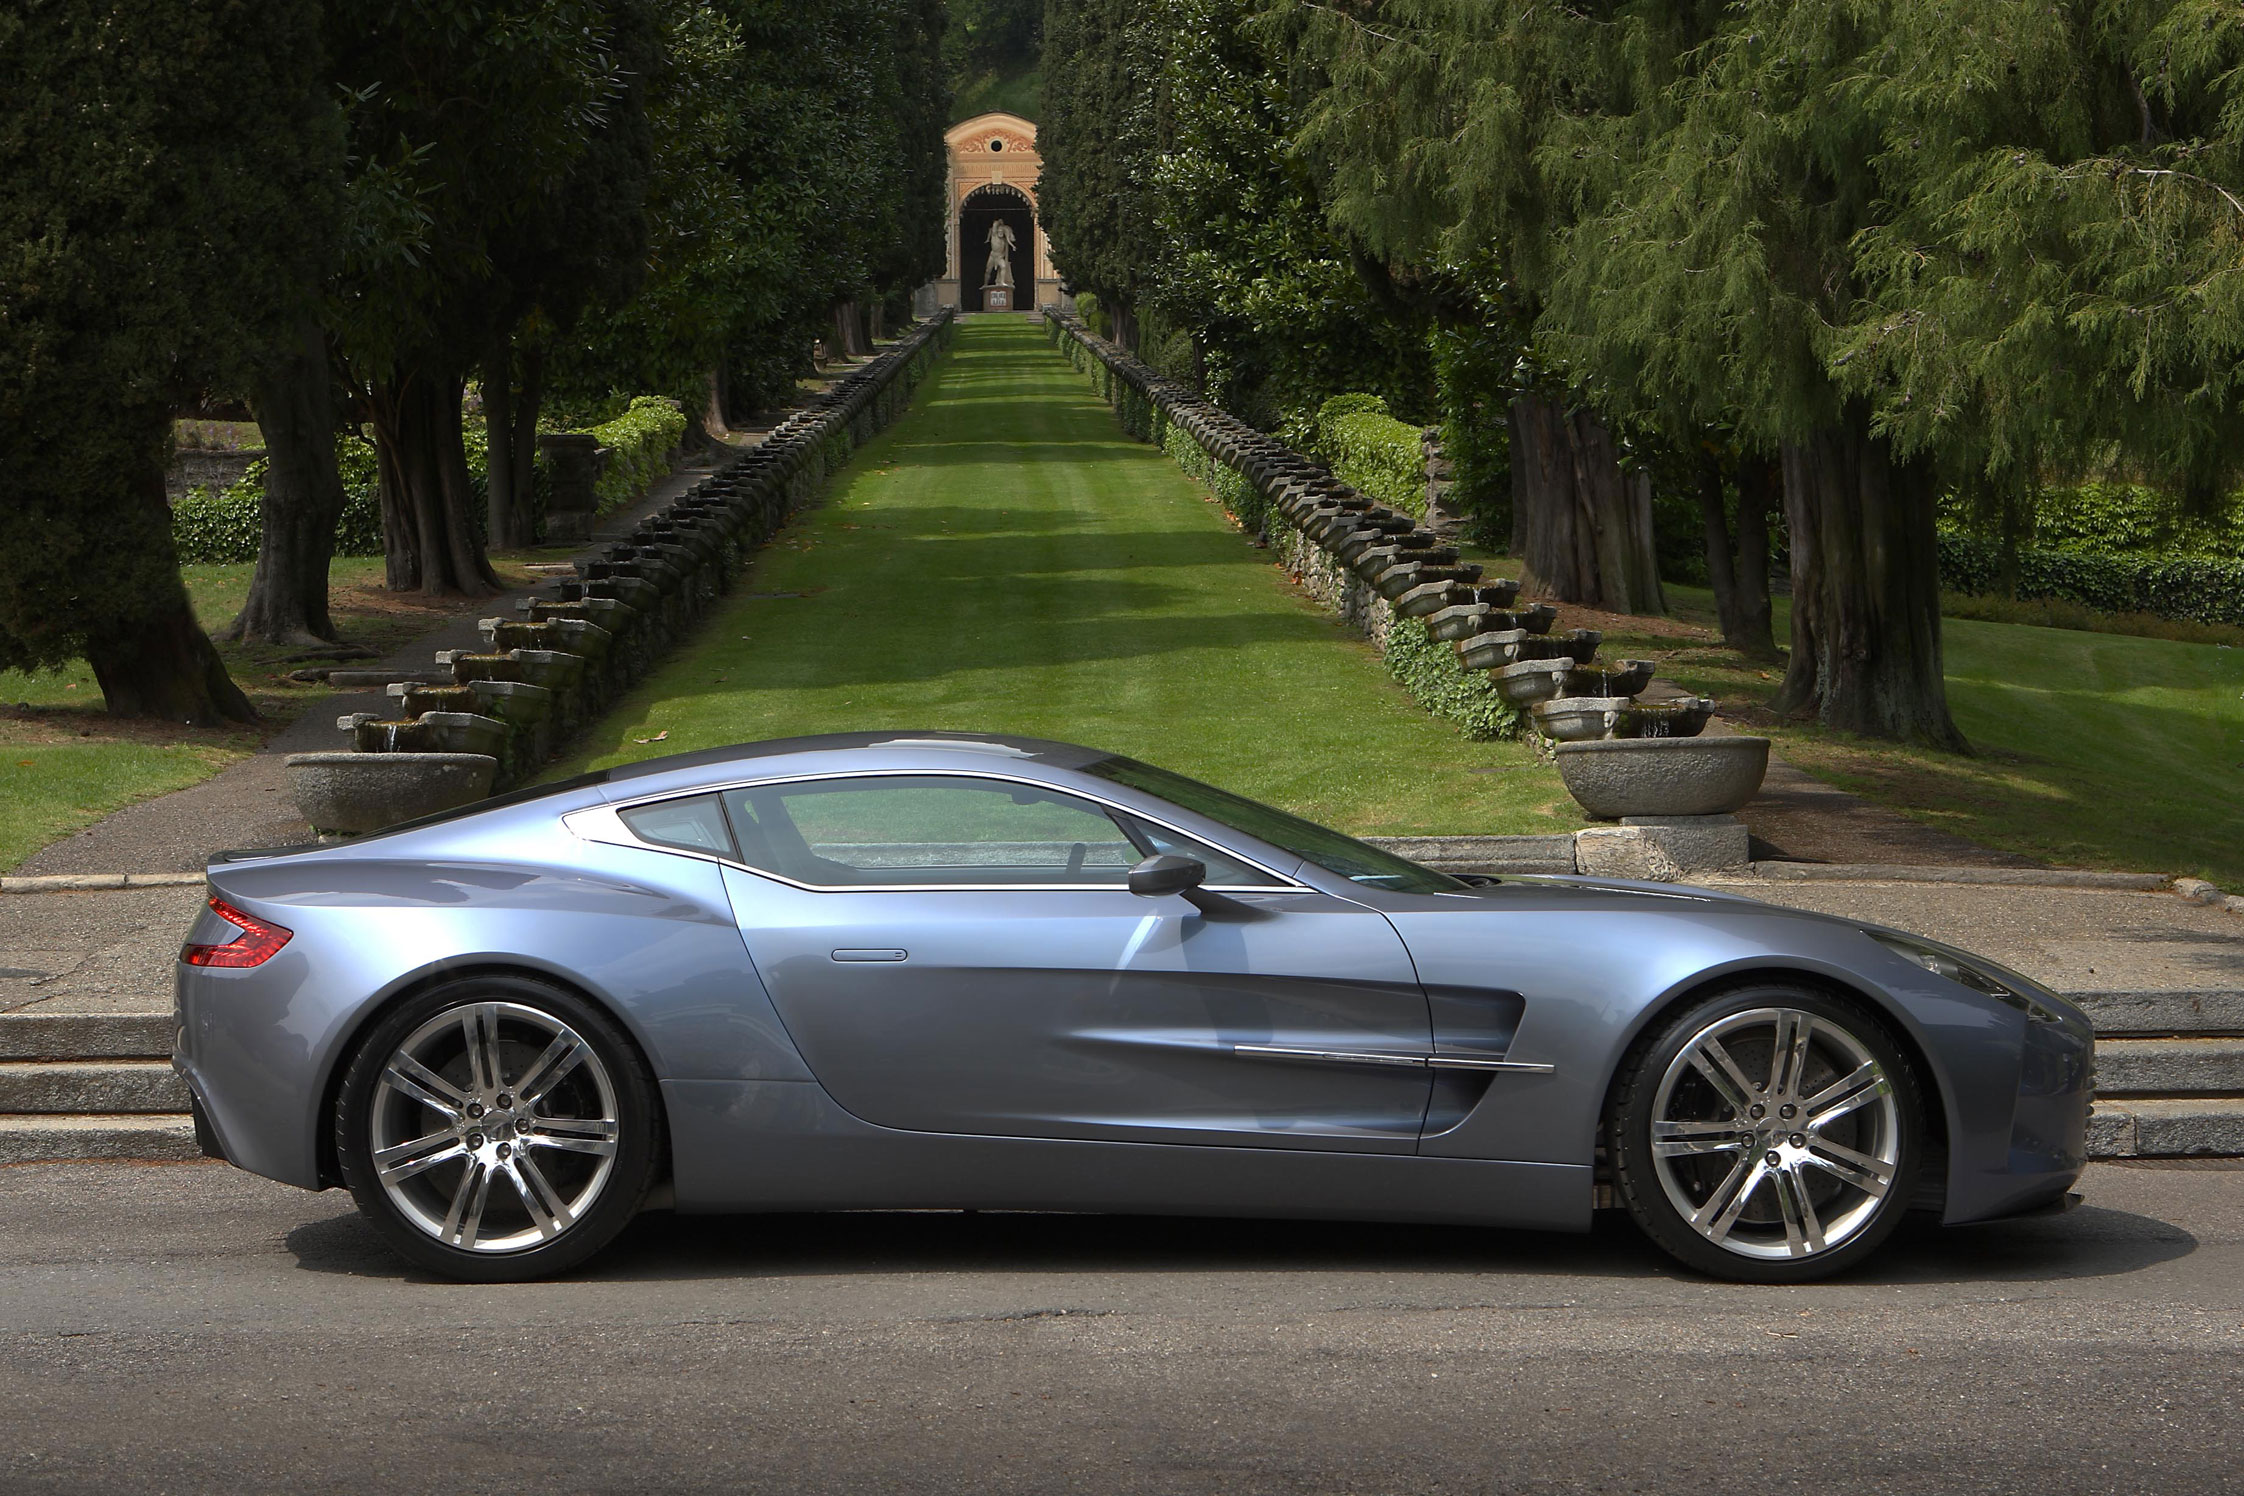 cars, Aston Martin, vehicles - desktop wallpaper